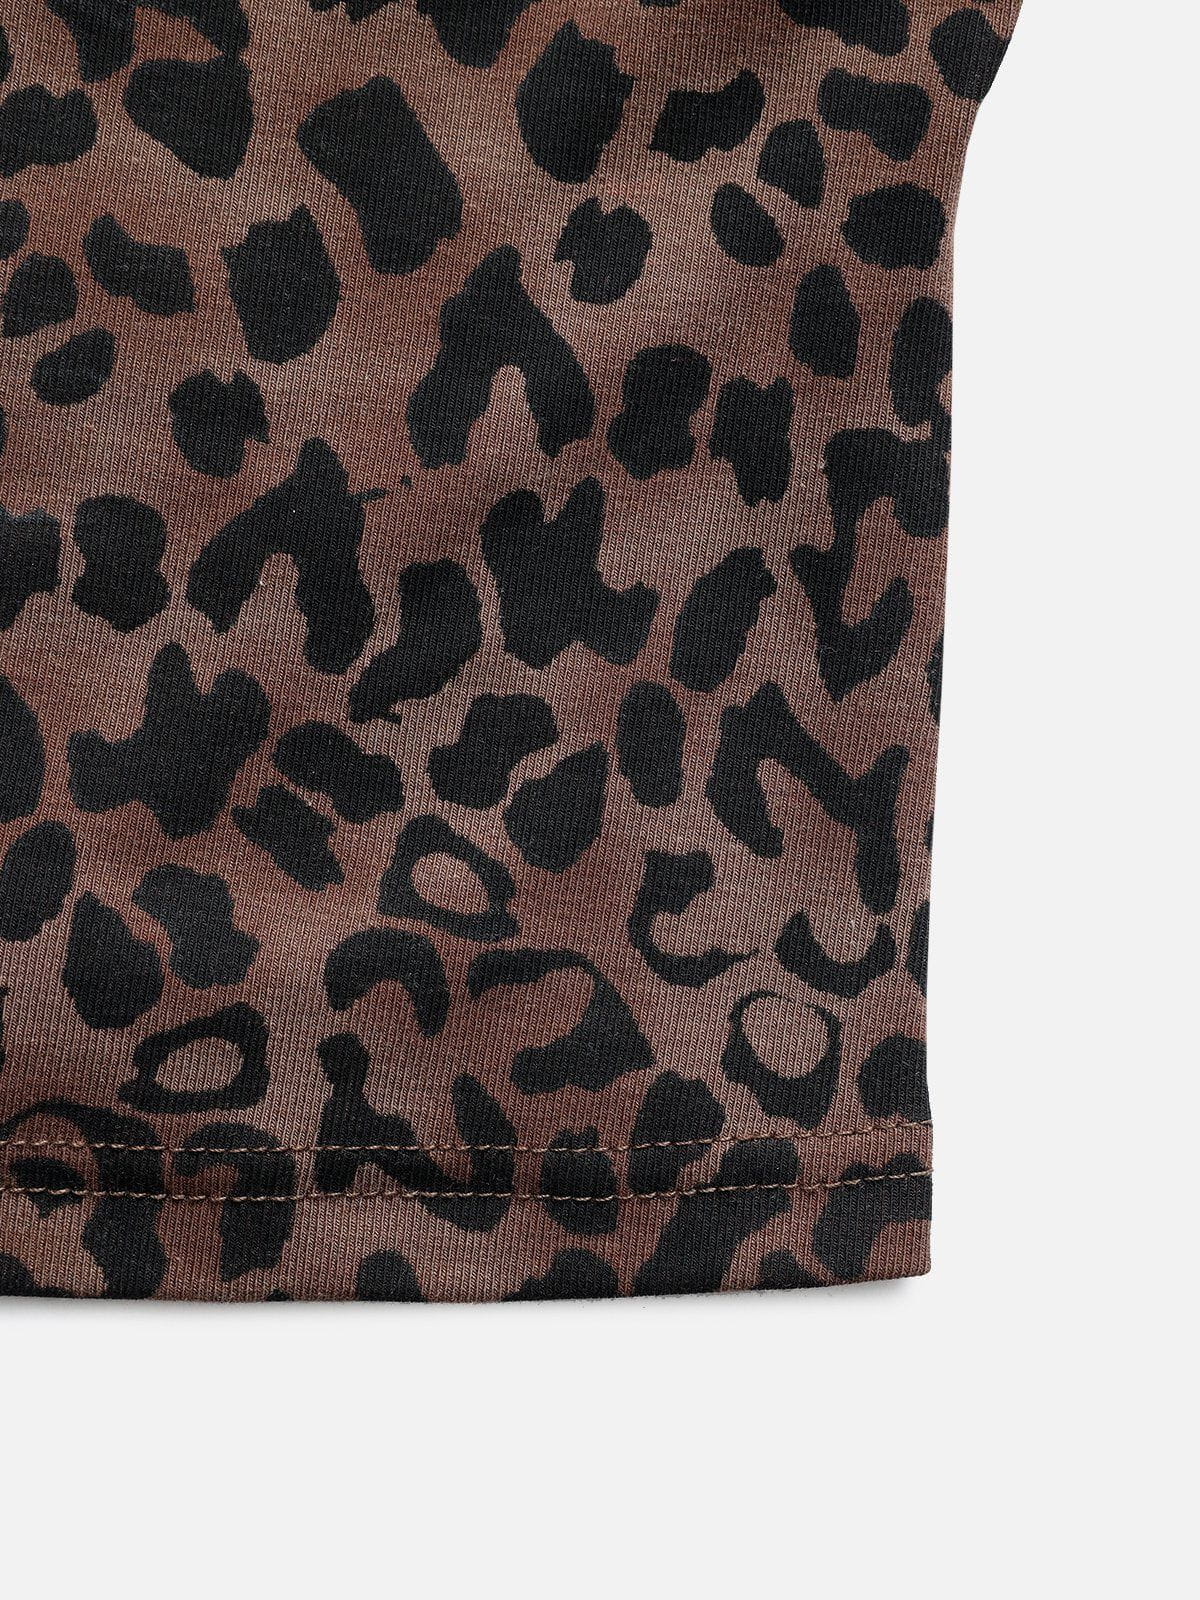 Aelfric Eden Leopard Print Cami Top